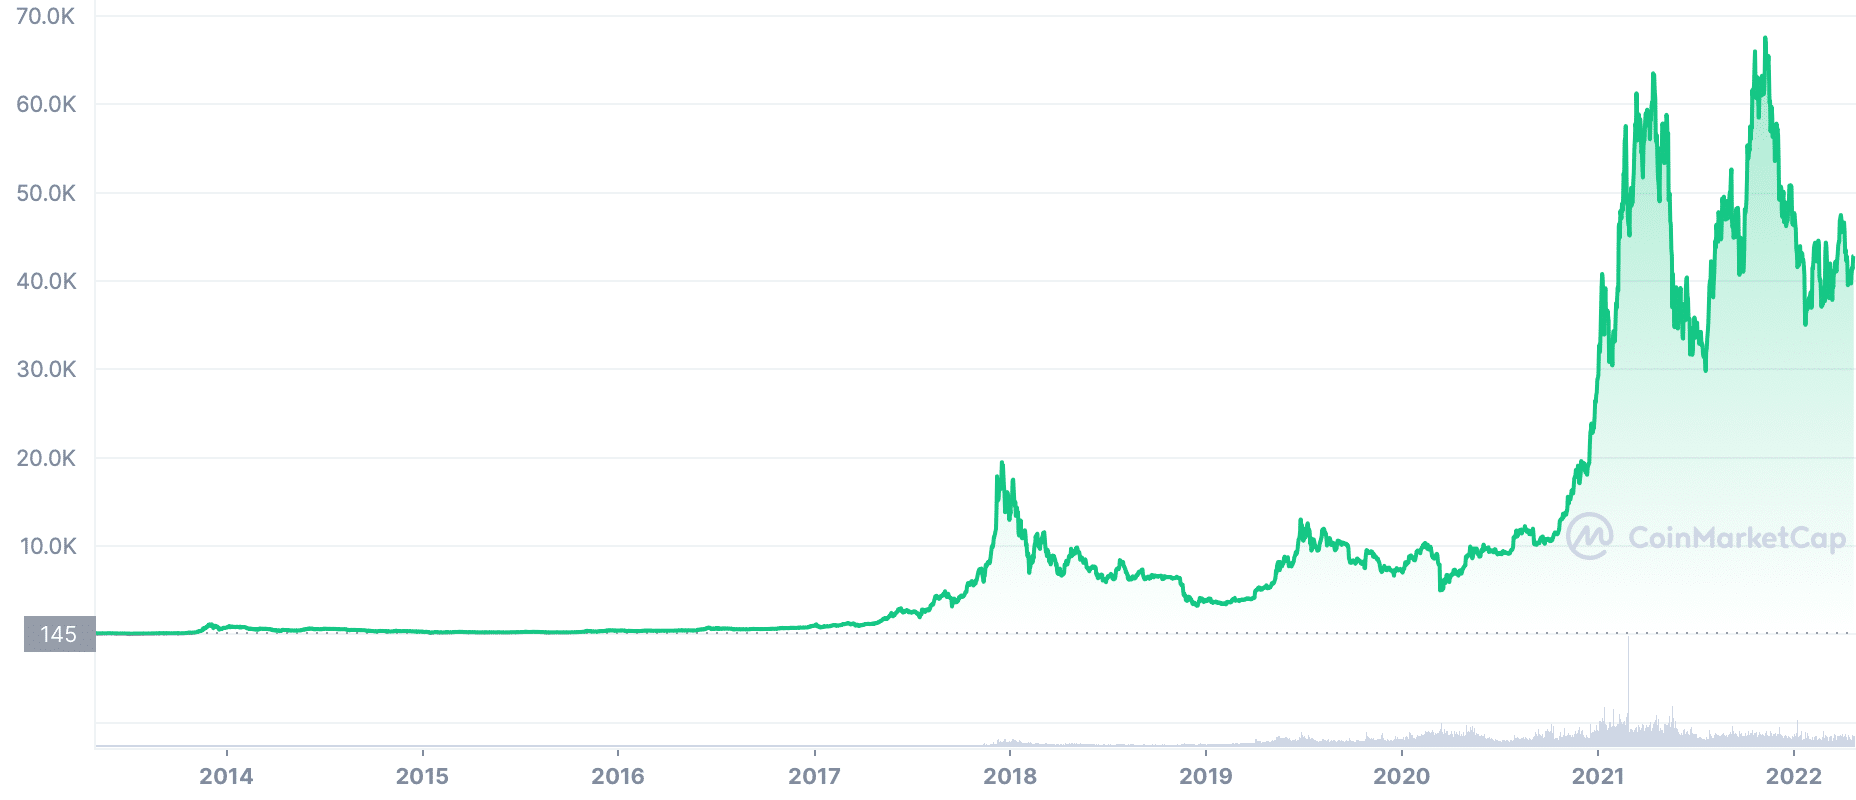 BTC Price Chart